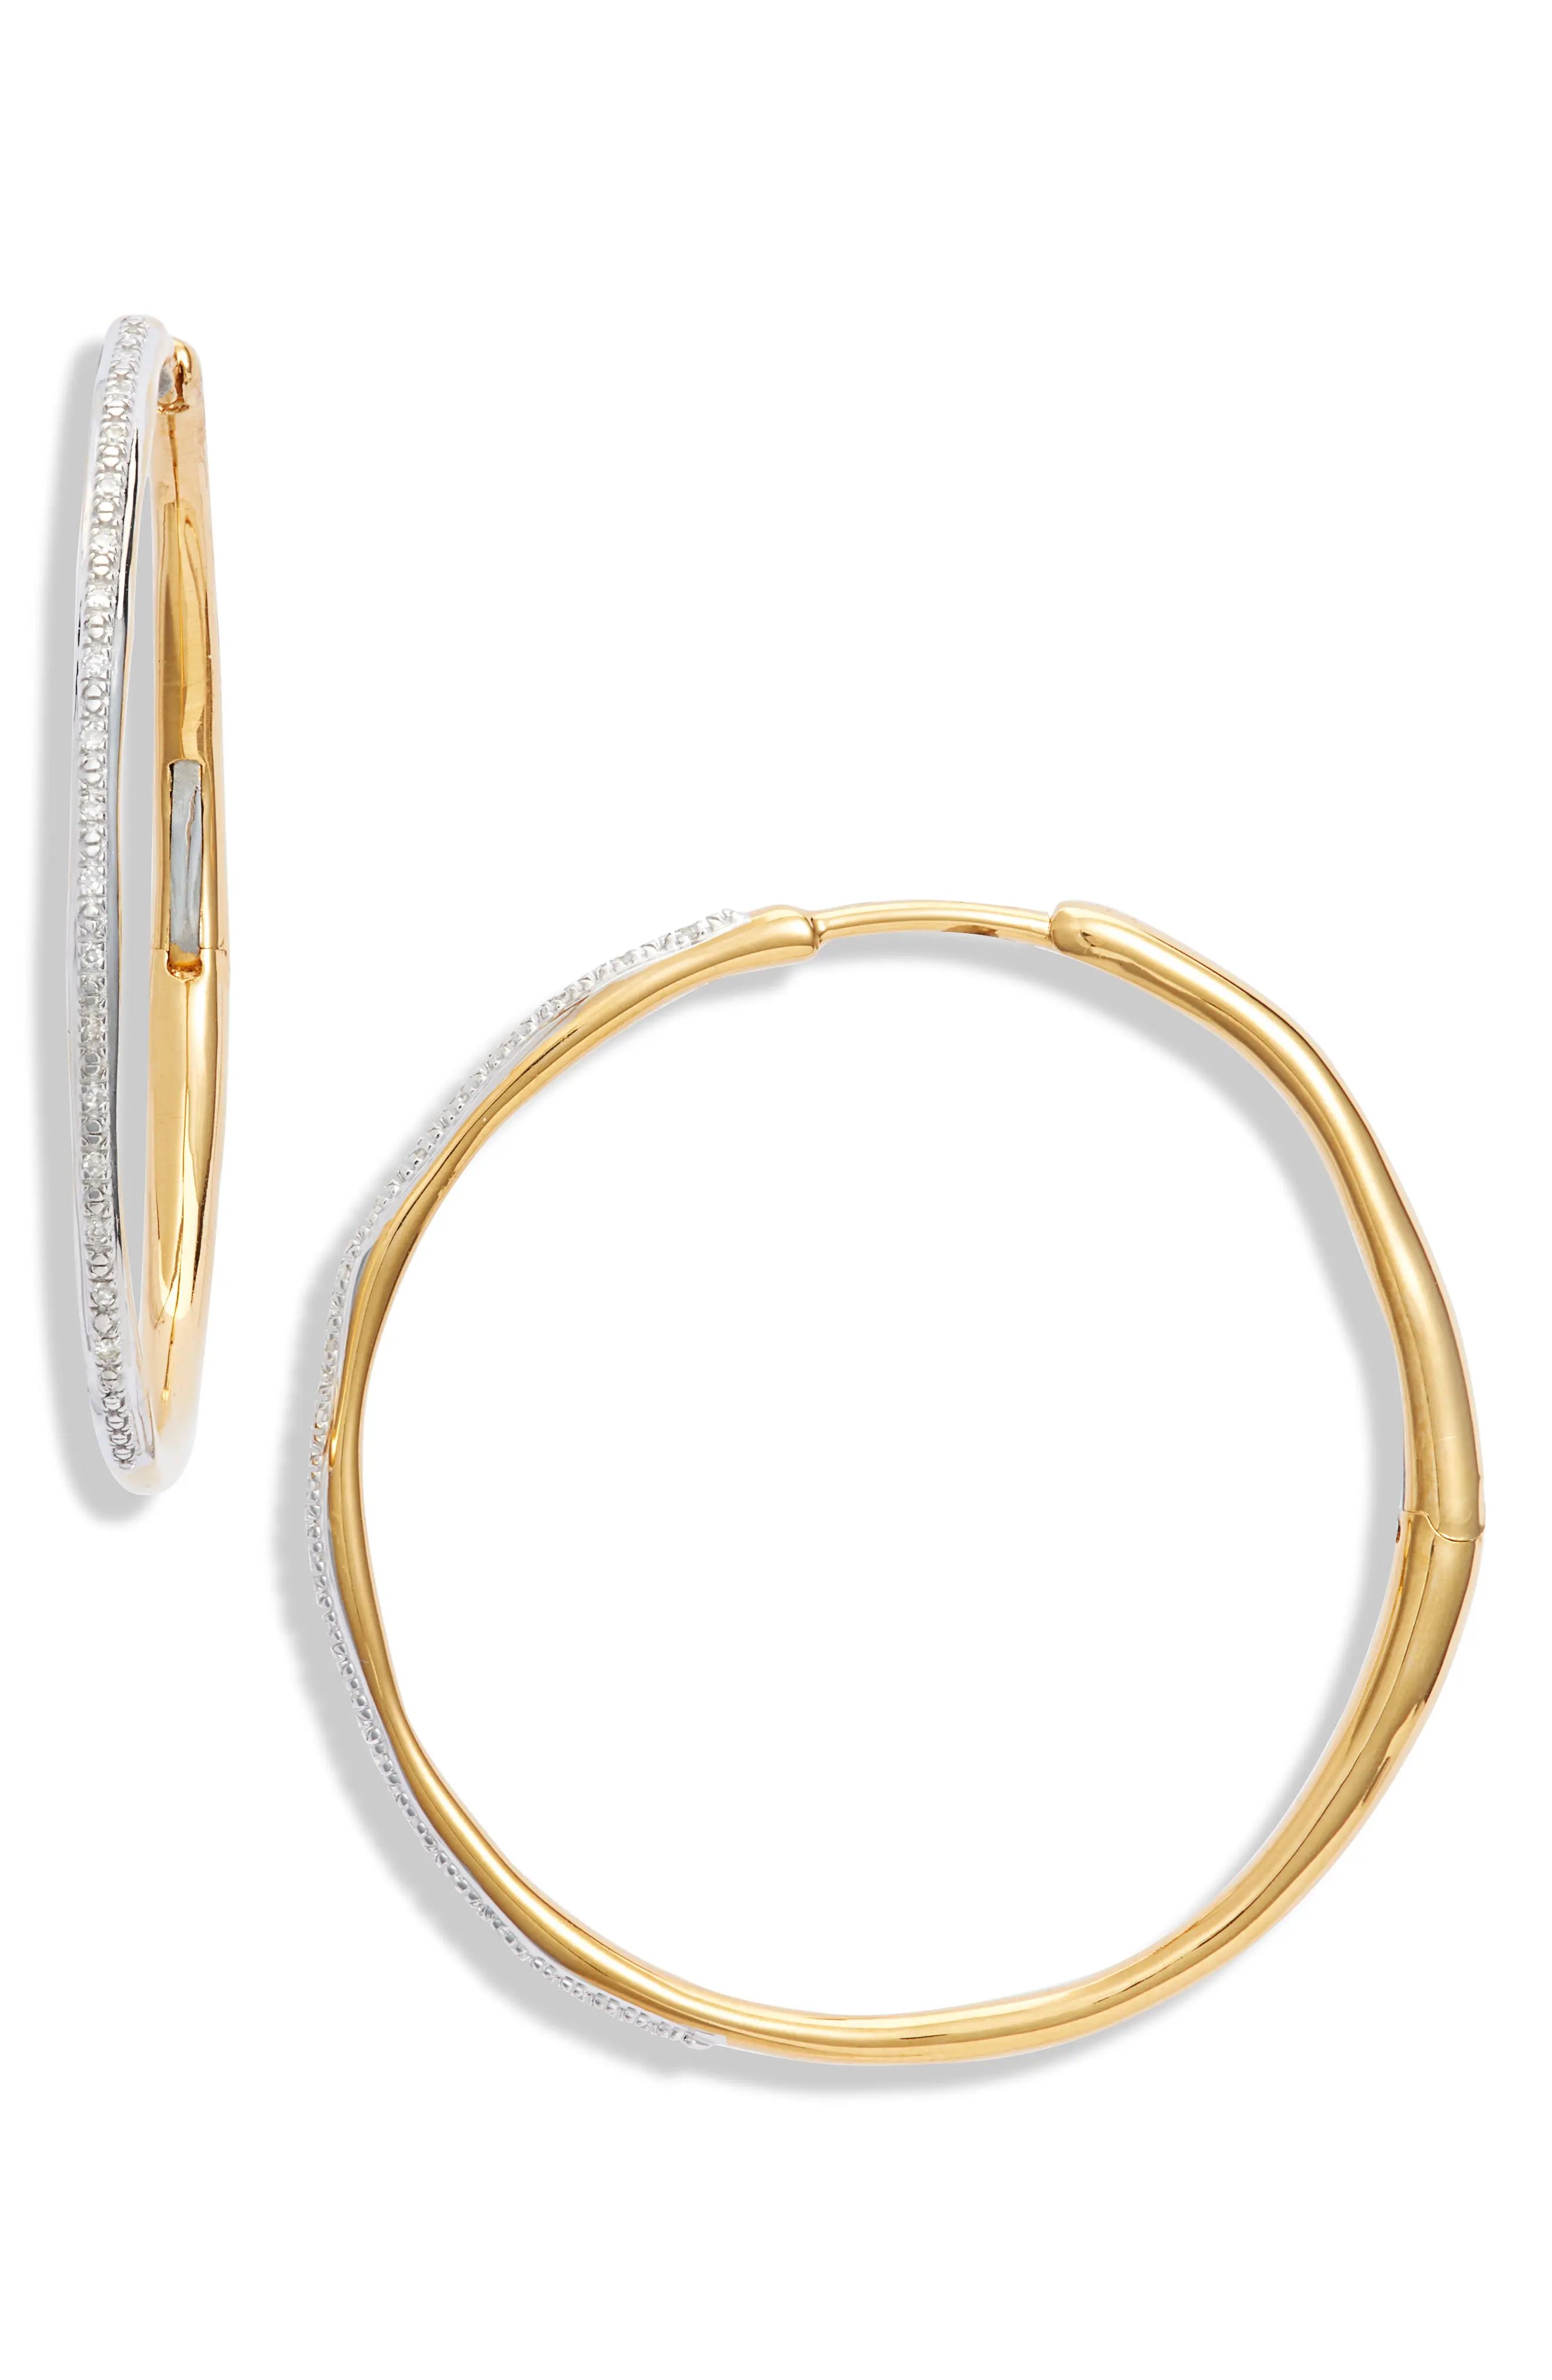 Monica Vinader Riva Large Diamond Hoop Earrings in 18Ct Gold Vermeil/st Silver at Nordstrom | Nordstrom